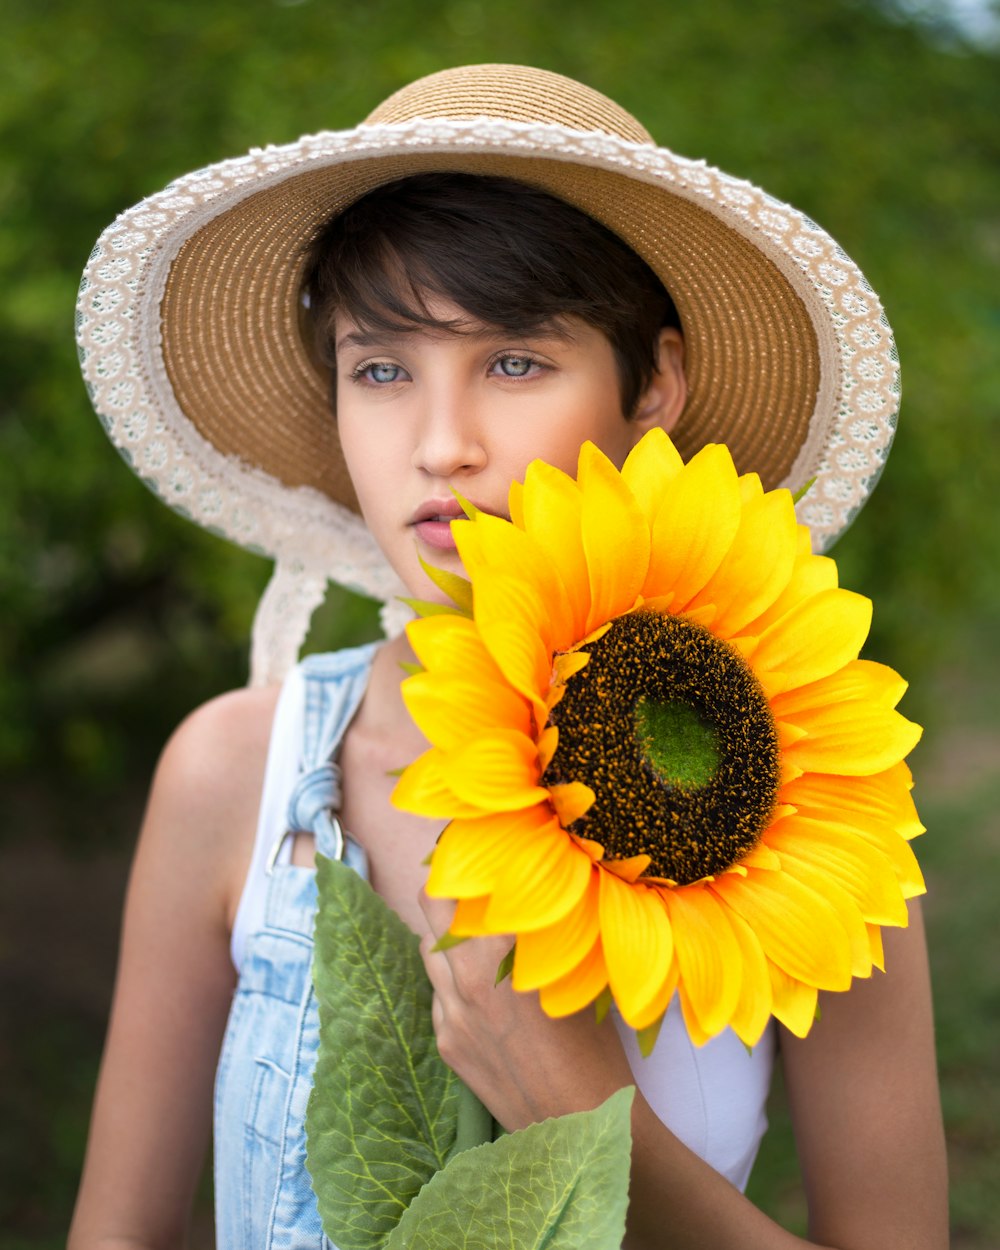 girl in yellow sun hat holding sunflower